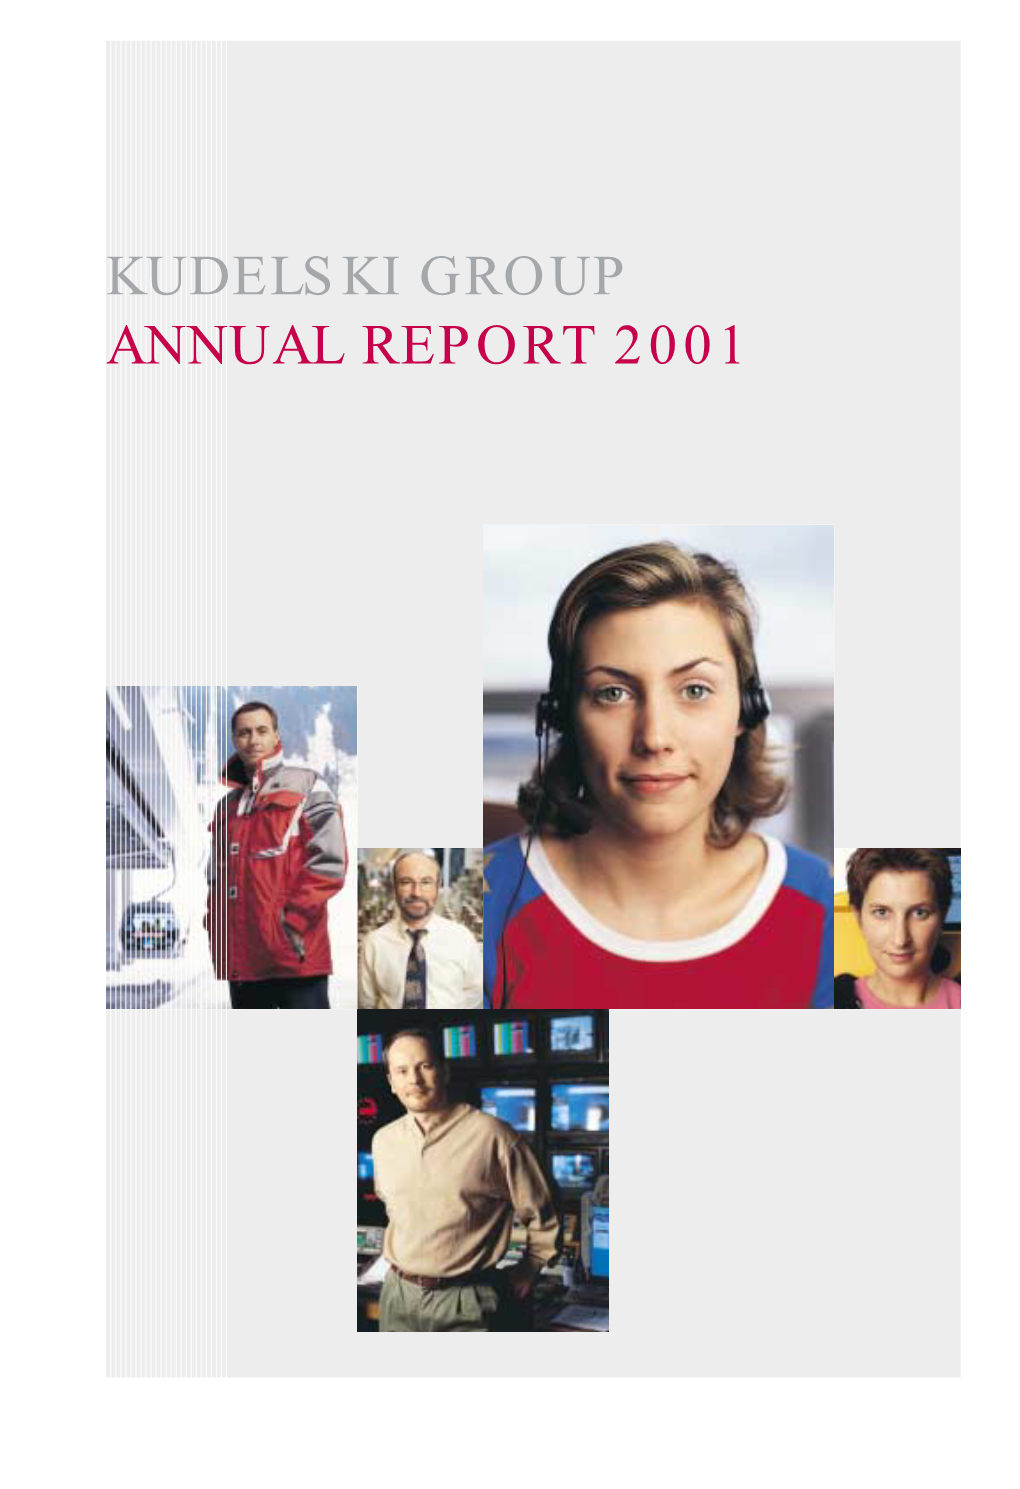 KUDELSKI GROUP ANNUAL REPORT 2001 ANNUAL REPORT2001 KUDELSKI GROUP That Evokestheircompany'sactivitysector